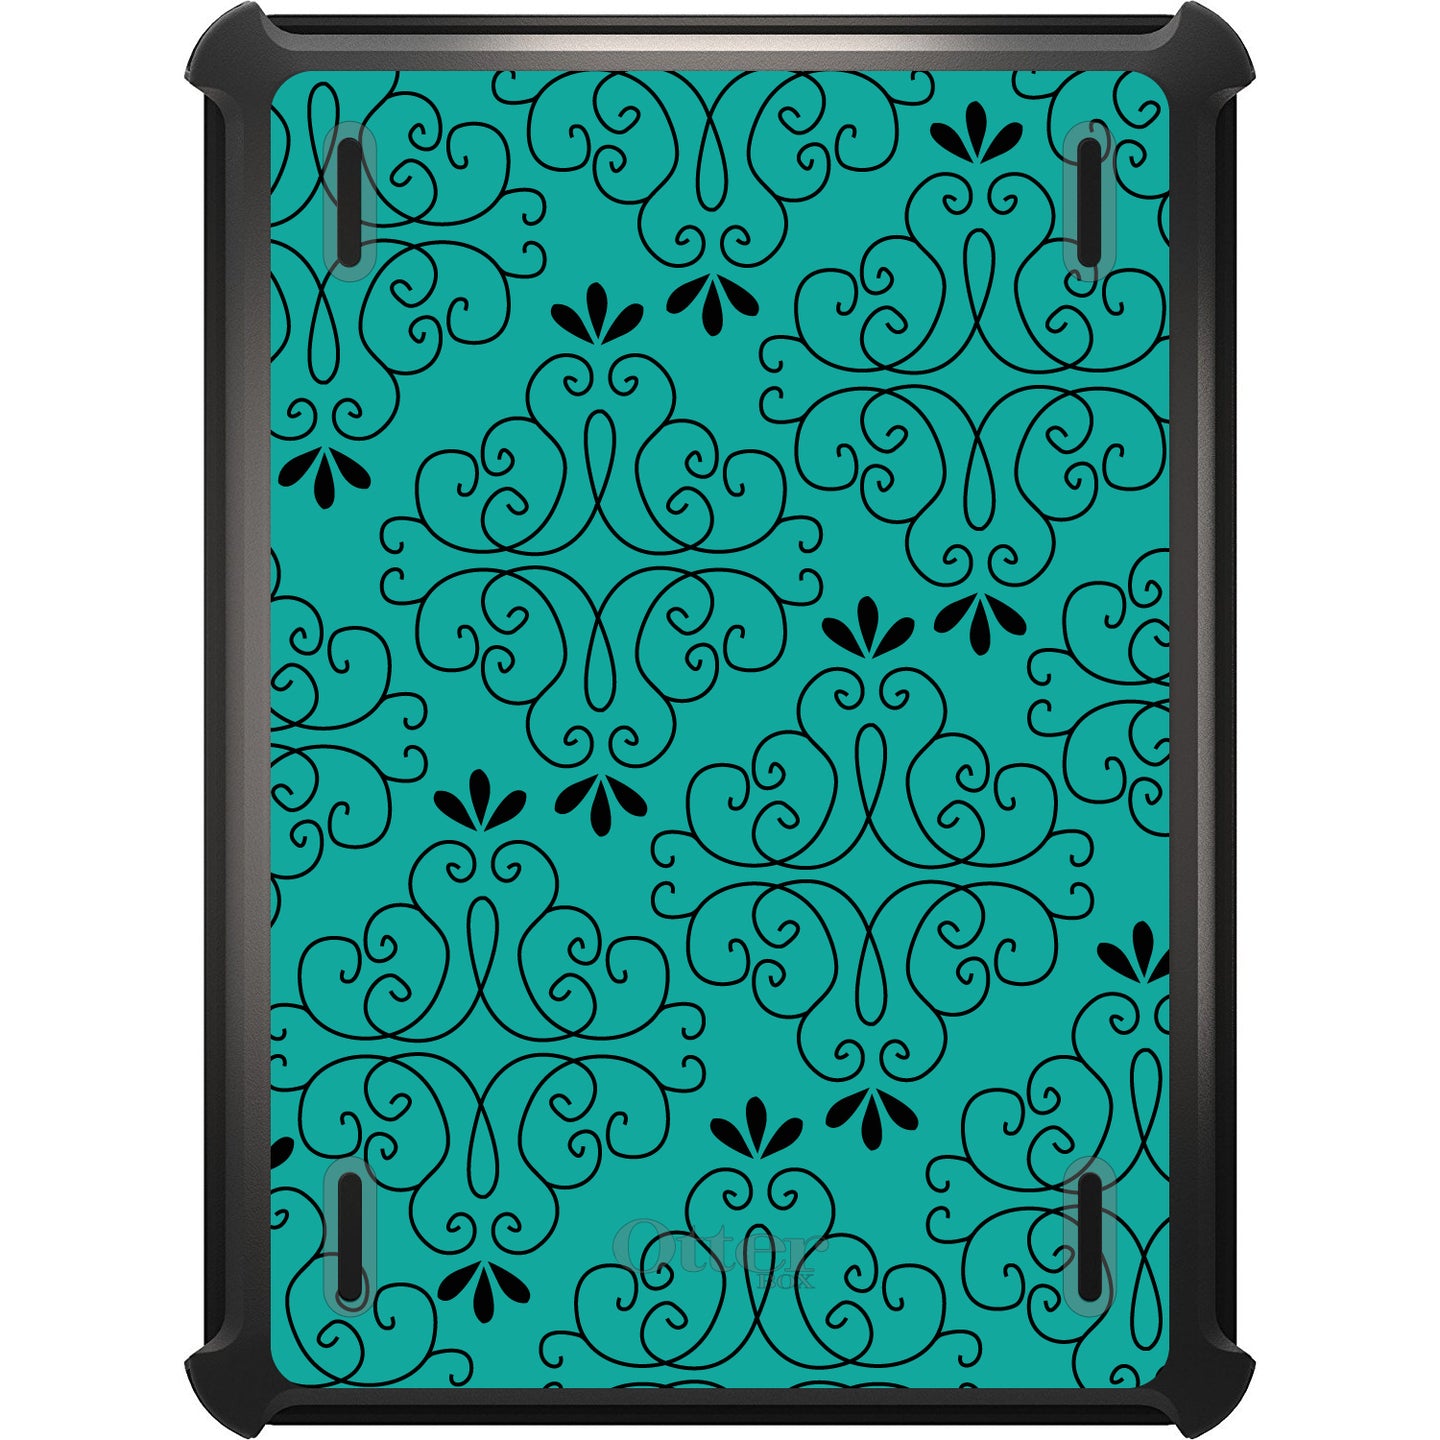 DistinctInk™ OtterBox Defender Series Case for Apple iPad / iPad Pro / iPad Air / iPad Mini - Coral Blue Black Floral Pattern